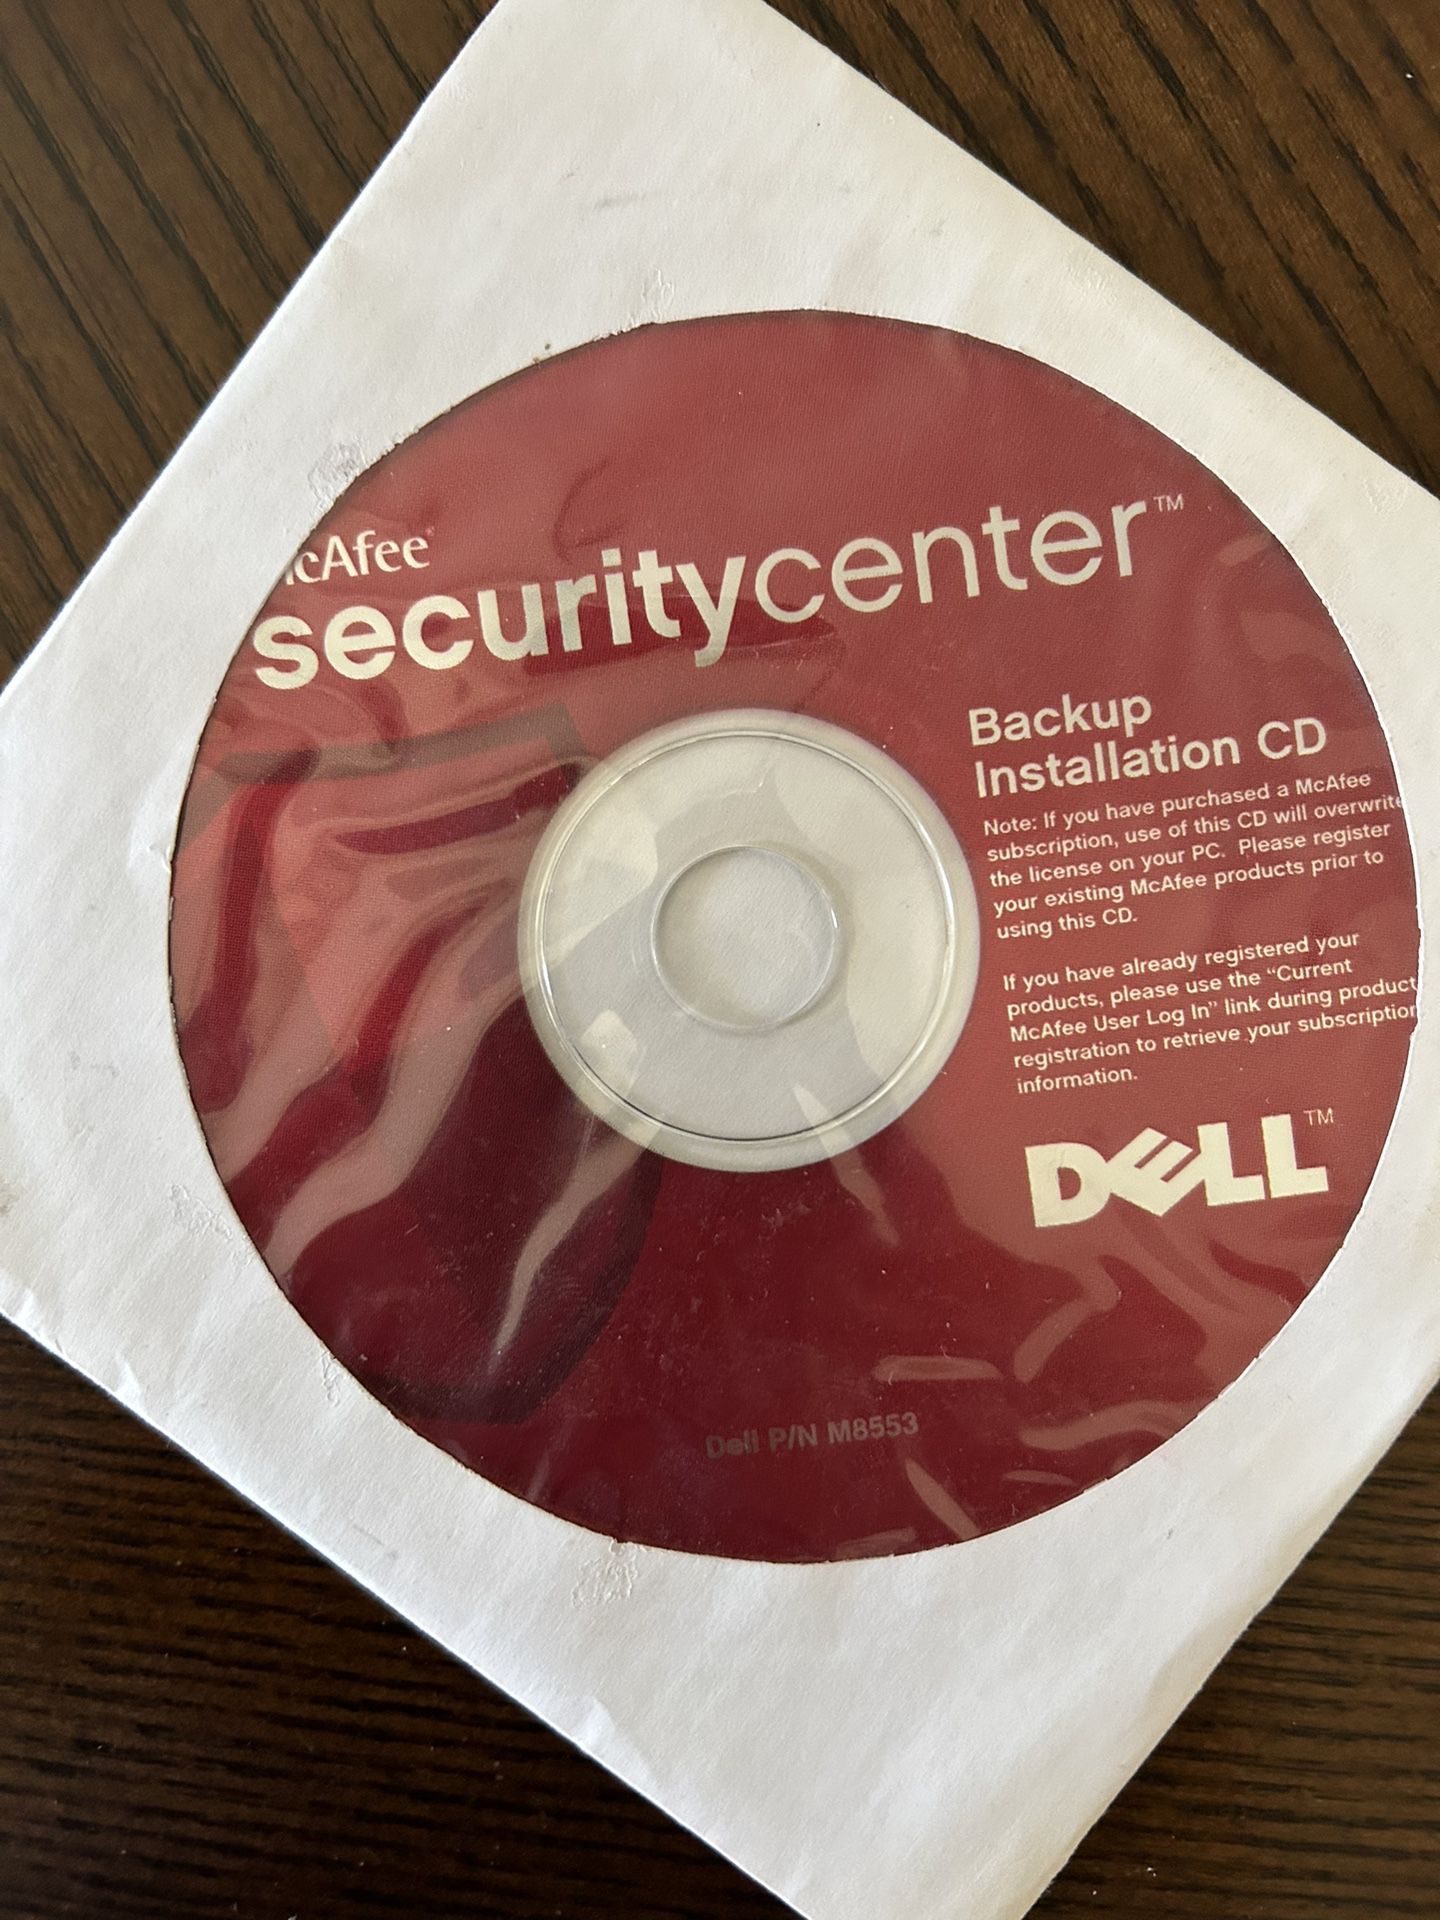 McAfee Backup Installation CD